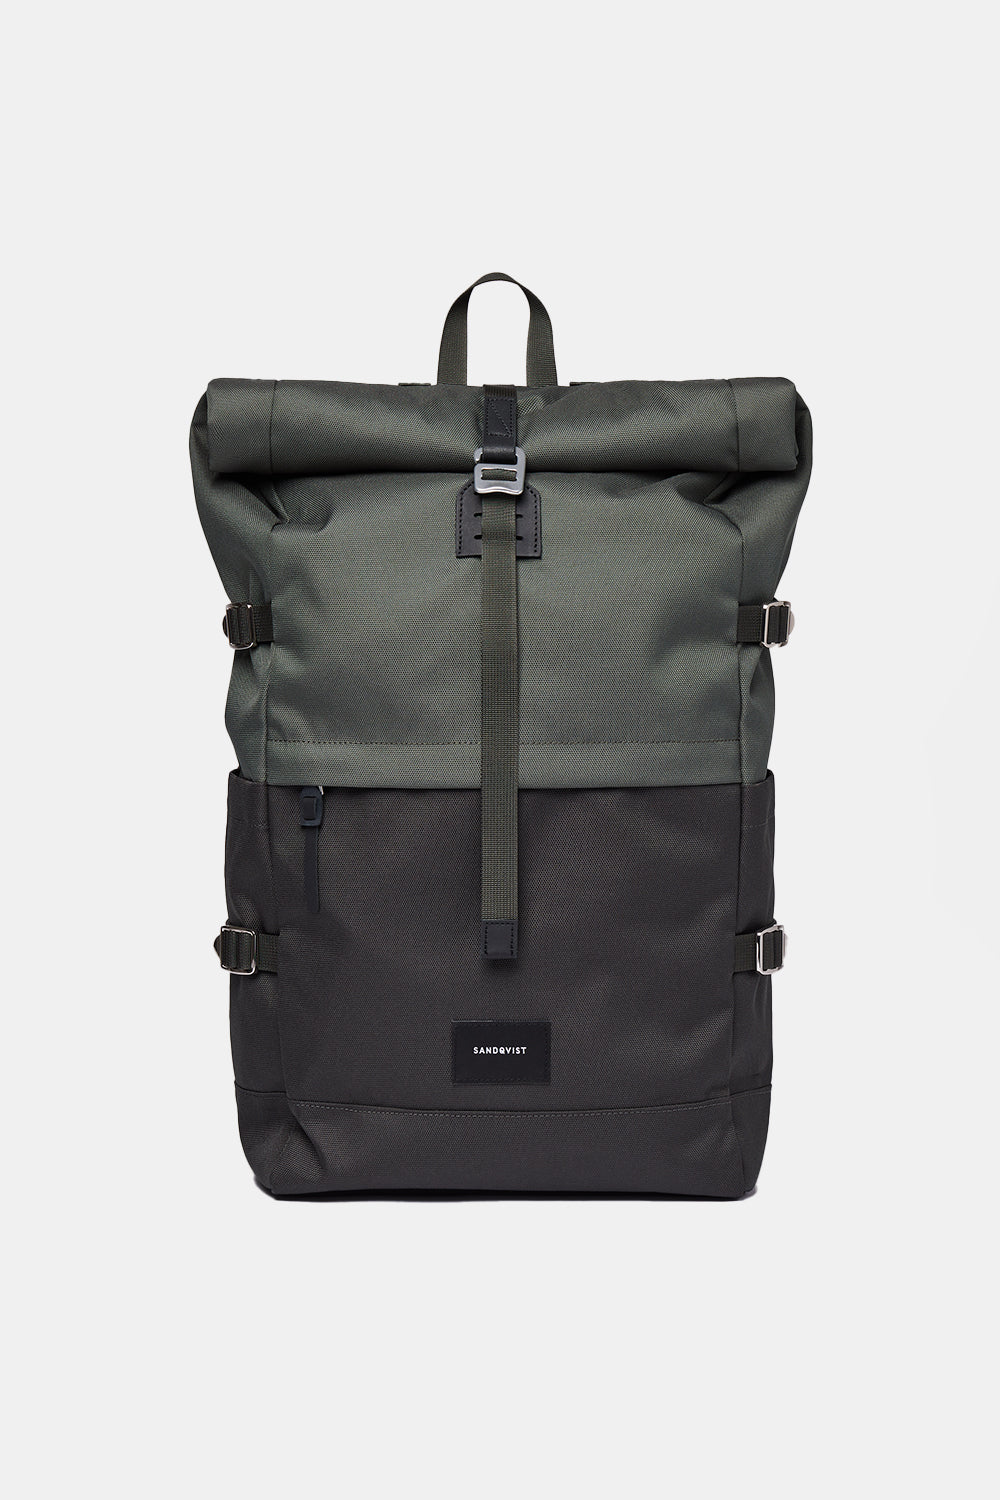 Sandqvist Bernt Backpack (Multi Green / Black)